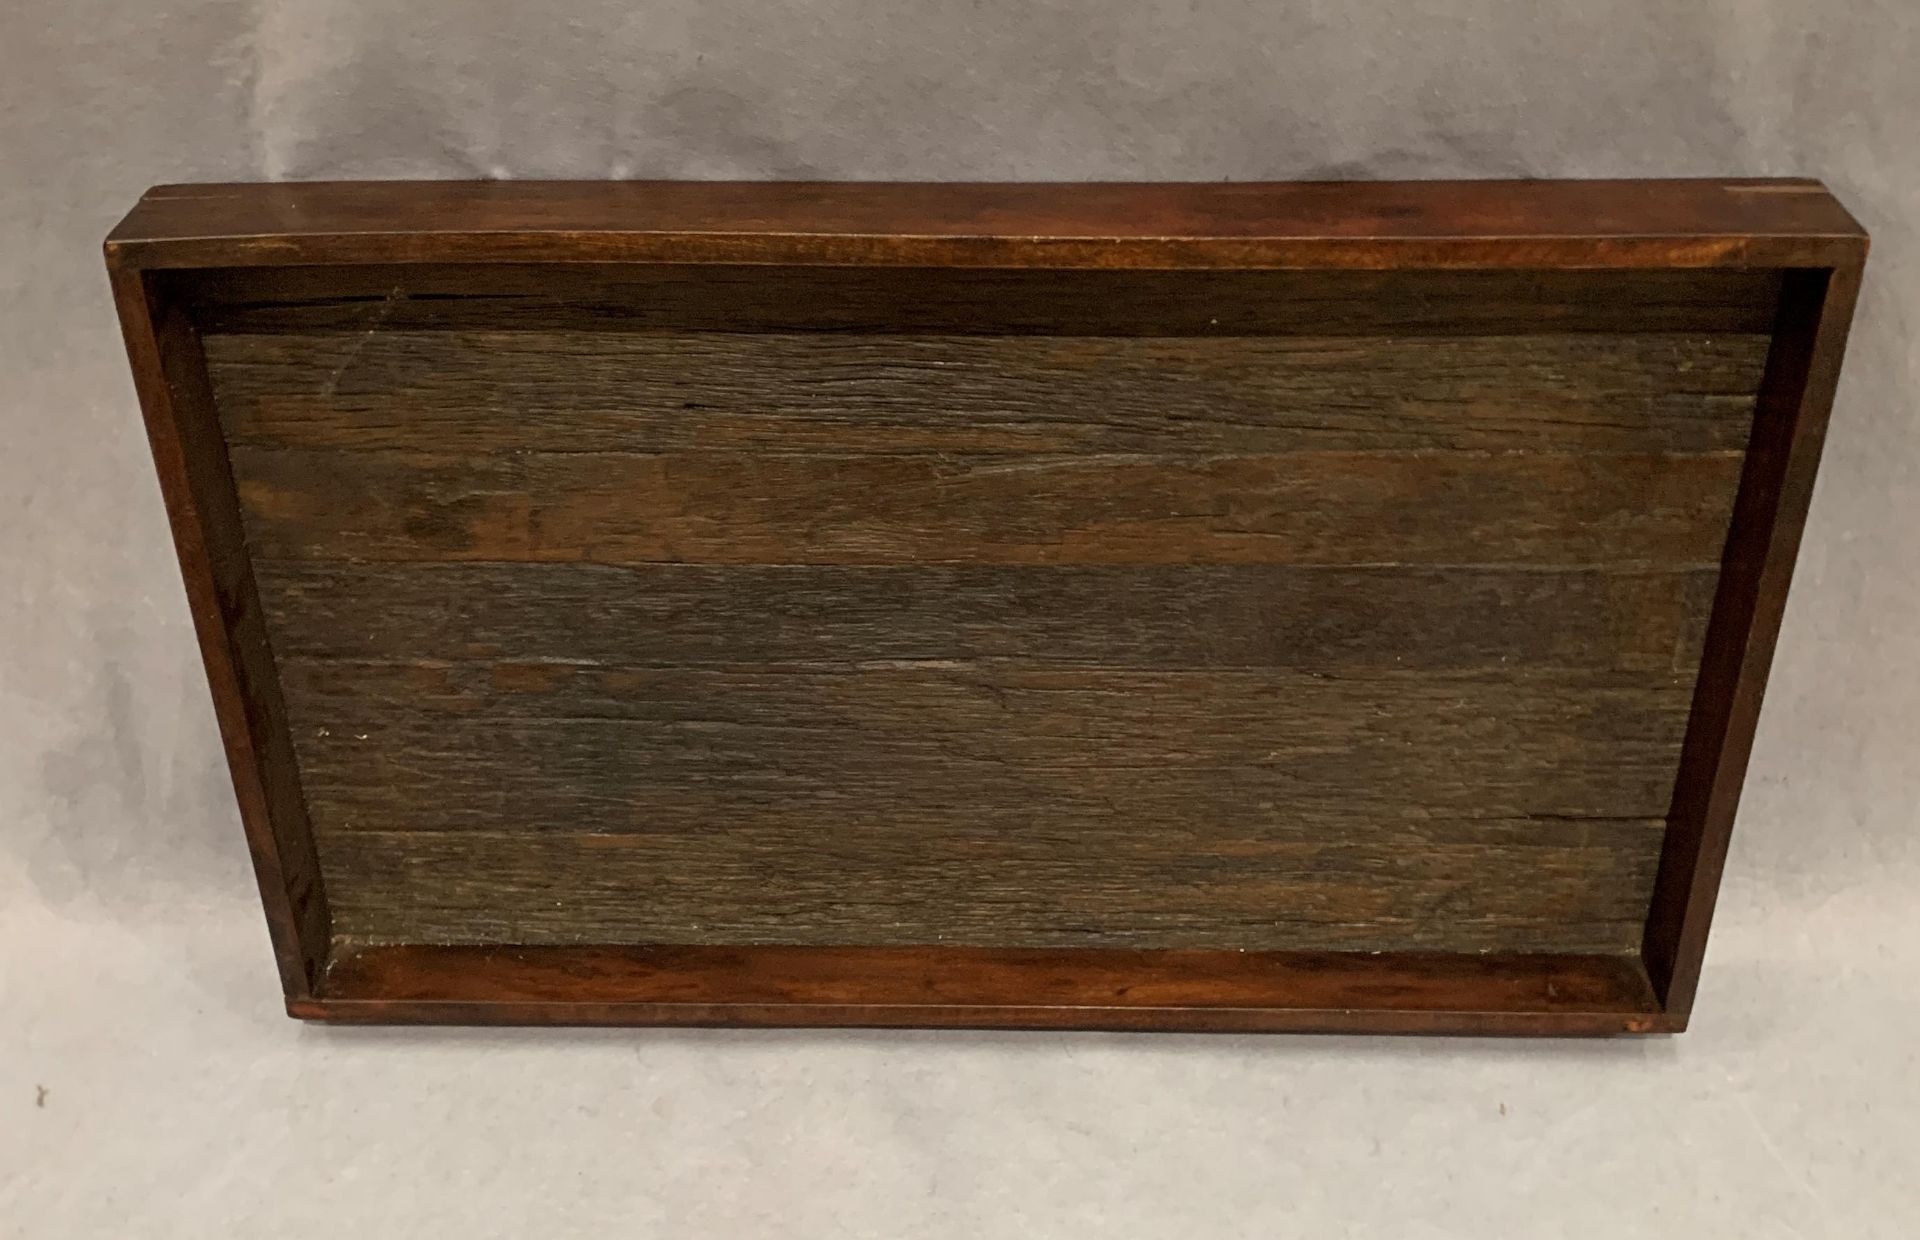 A wood driftwood tray 87 x 52 x 6cm deep - Image 2 of 2